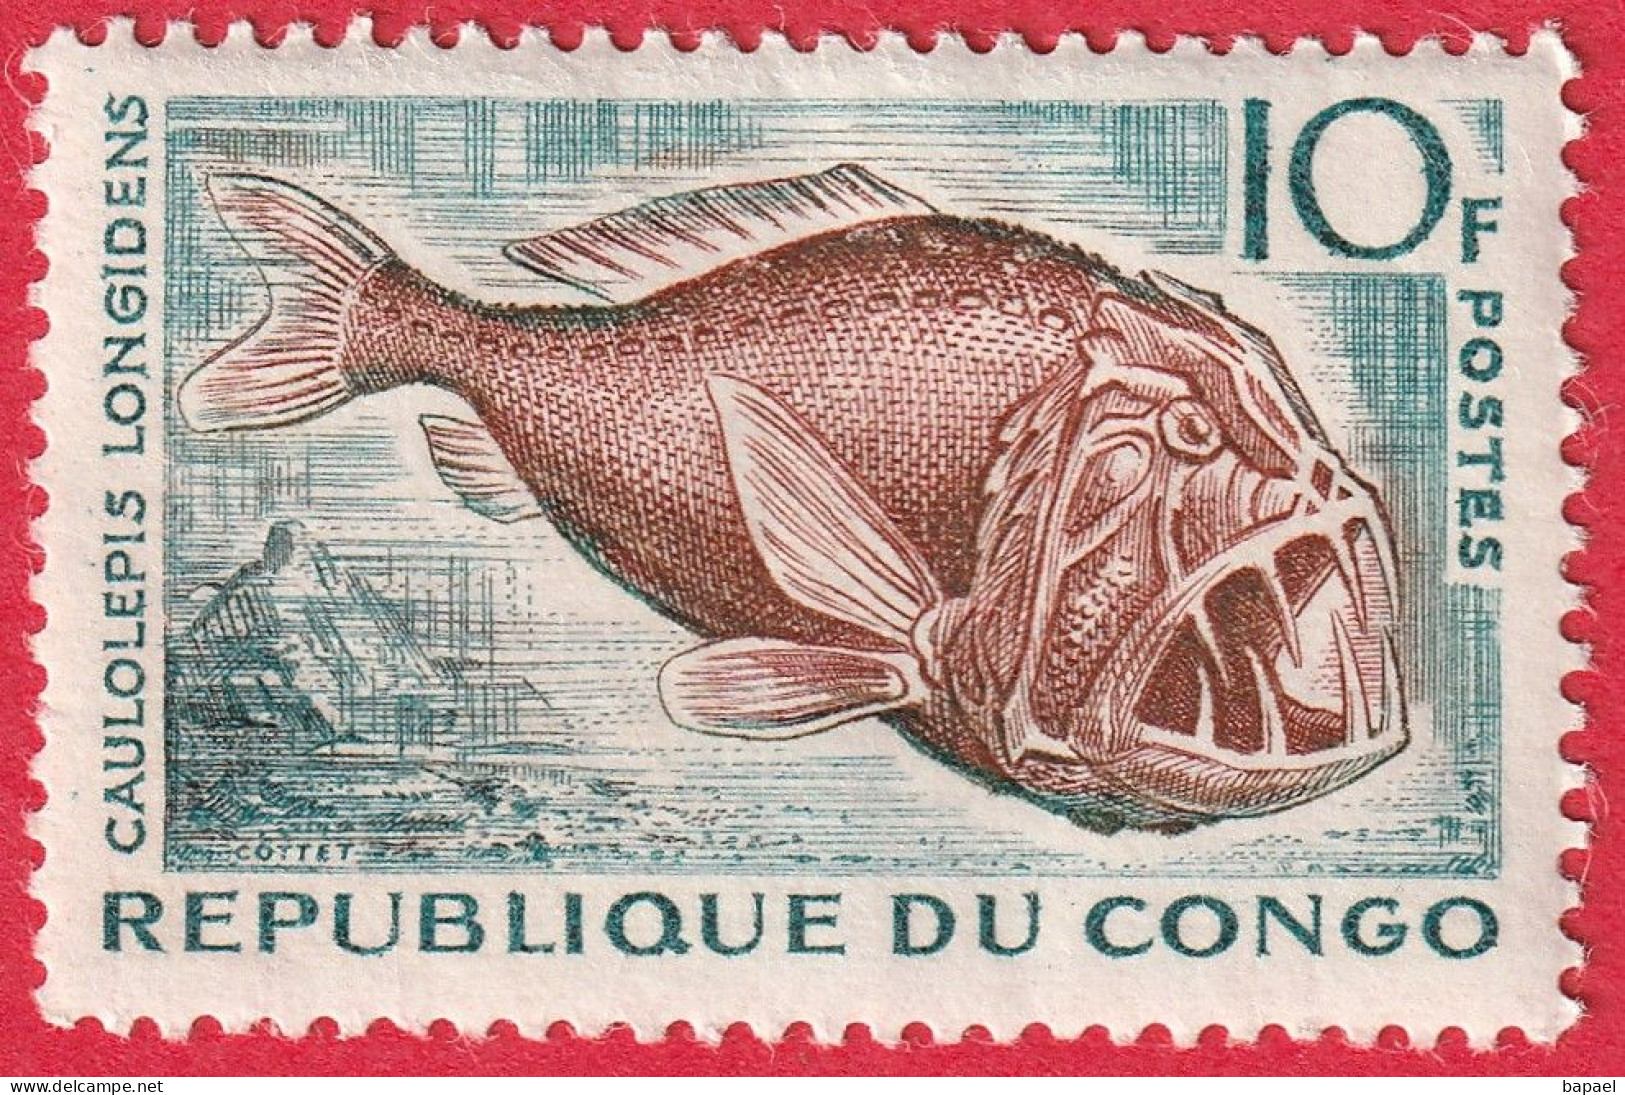 N° Yvert & Tellier 147 - République Du Congo (1961) (** - Neuf) - Caulolepis Longidens - Mint/hinged